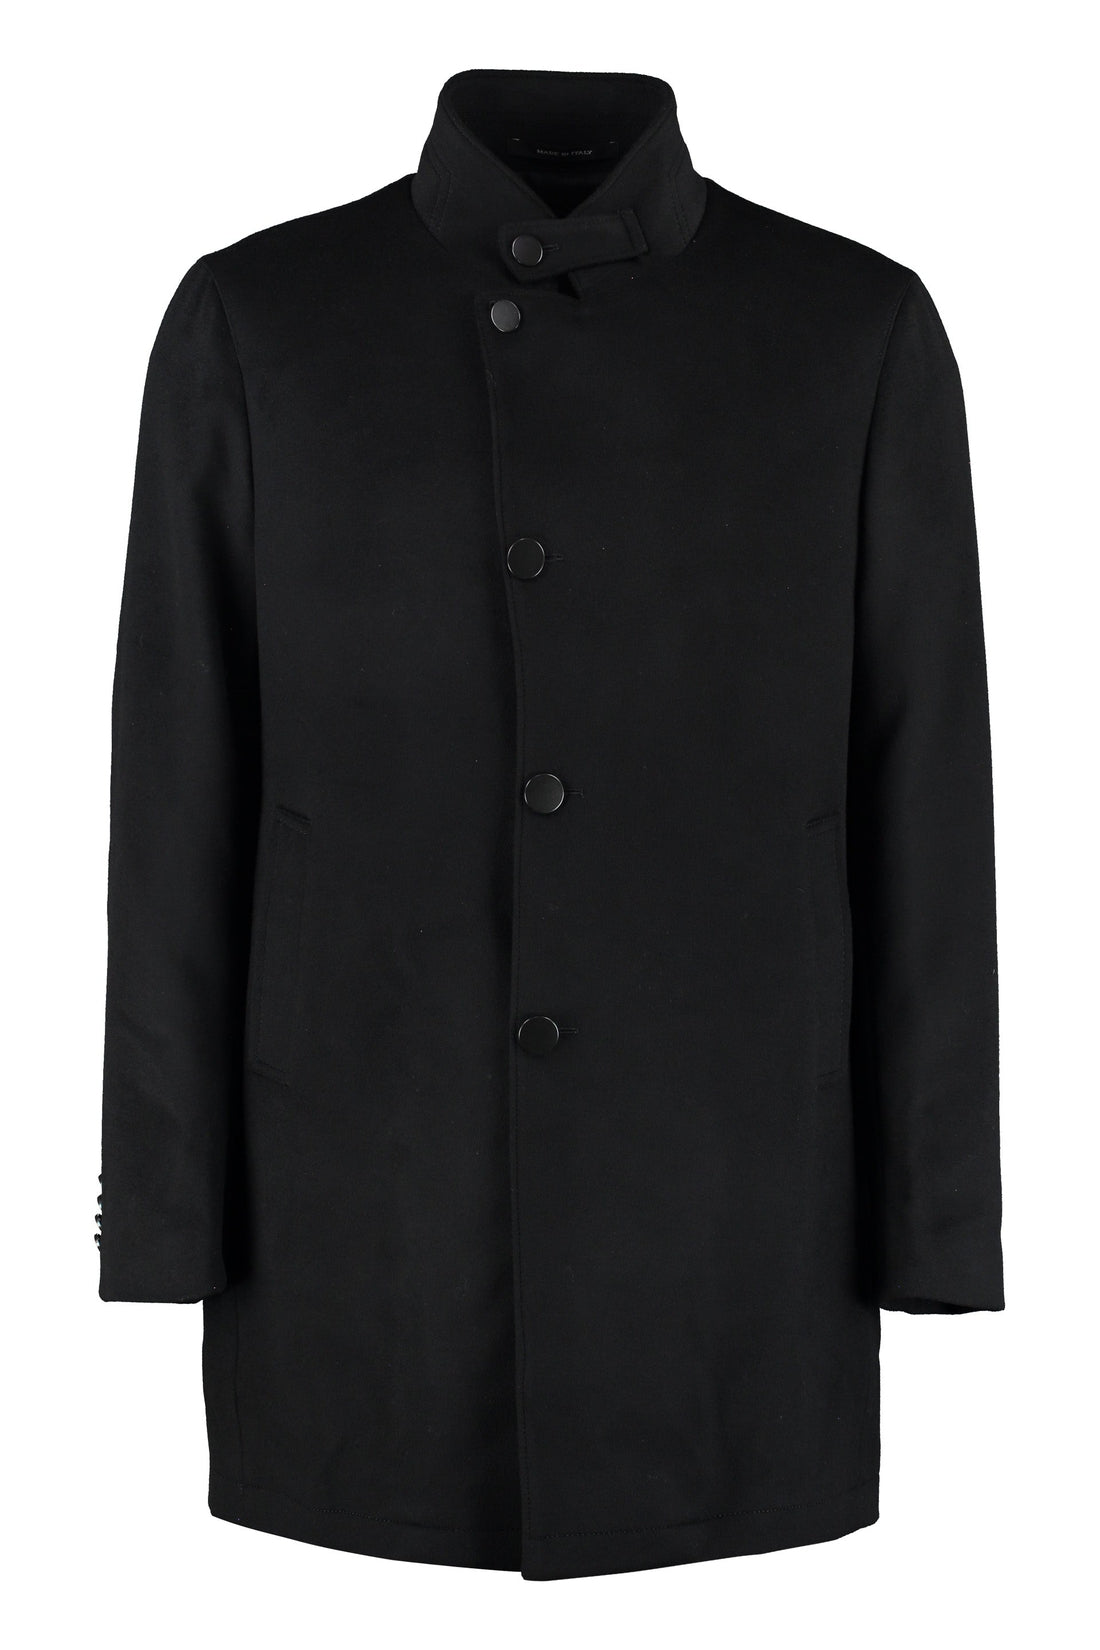 Tagliatore-OUTLET-SALE-Virgin wool jacket-ARCHIVIST